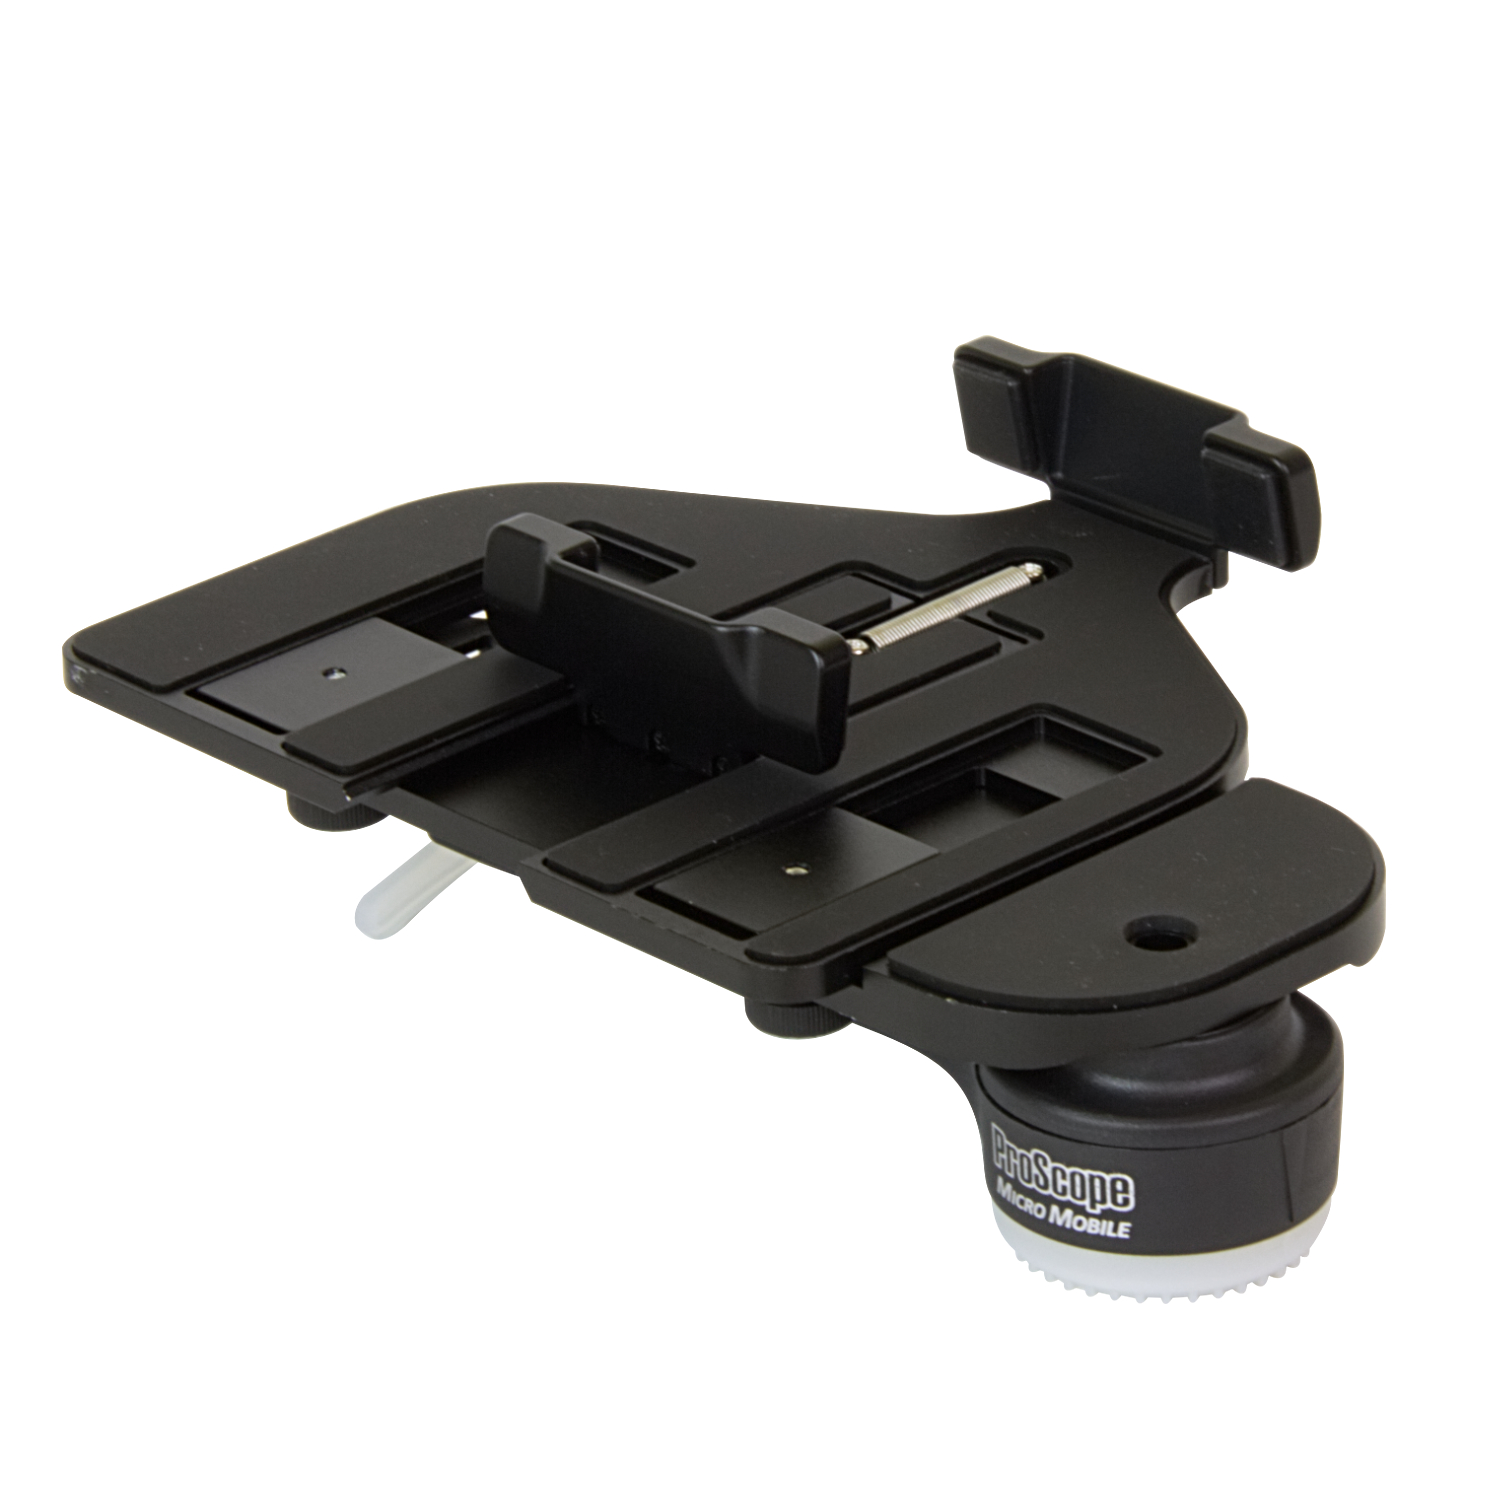 Smartphone Microscope & Projector Kit 